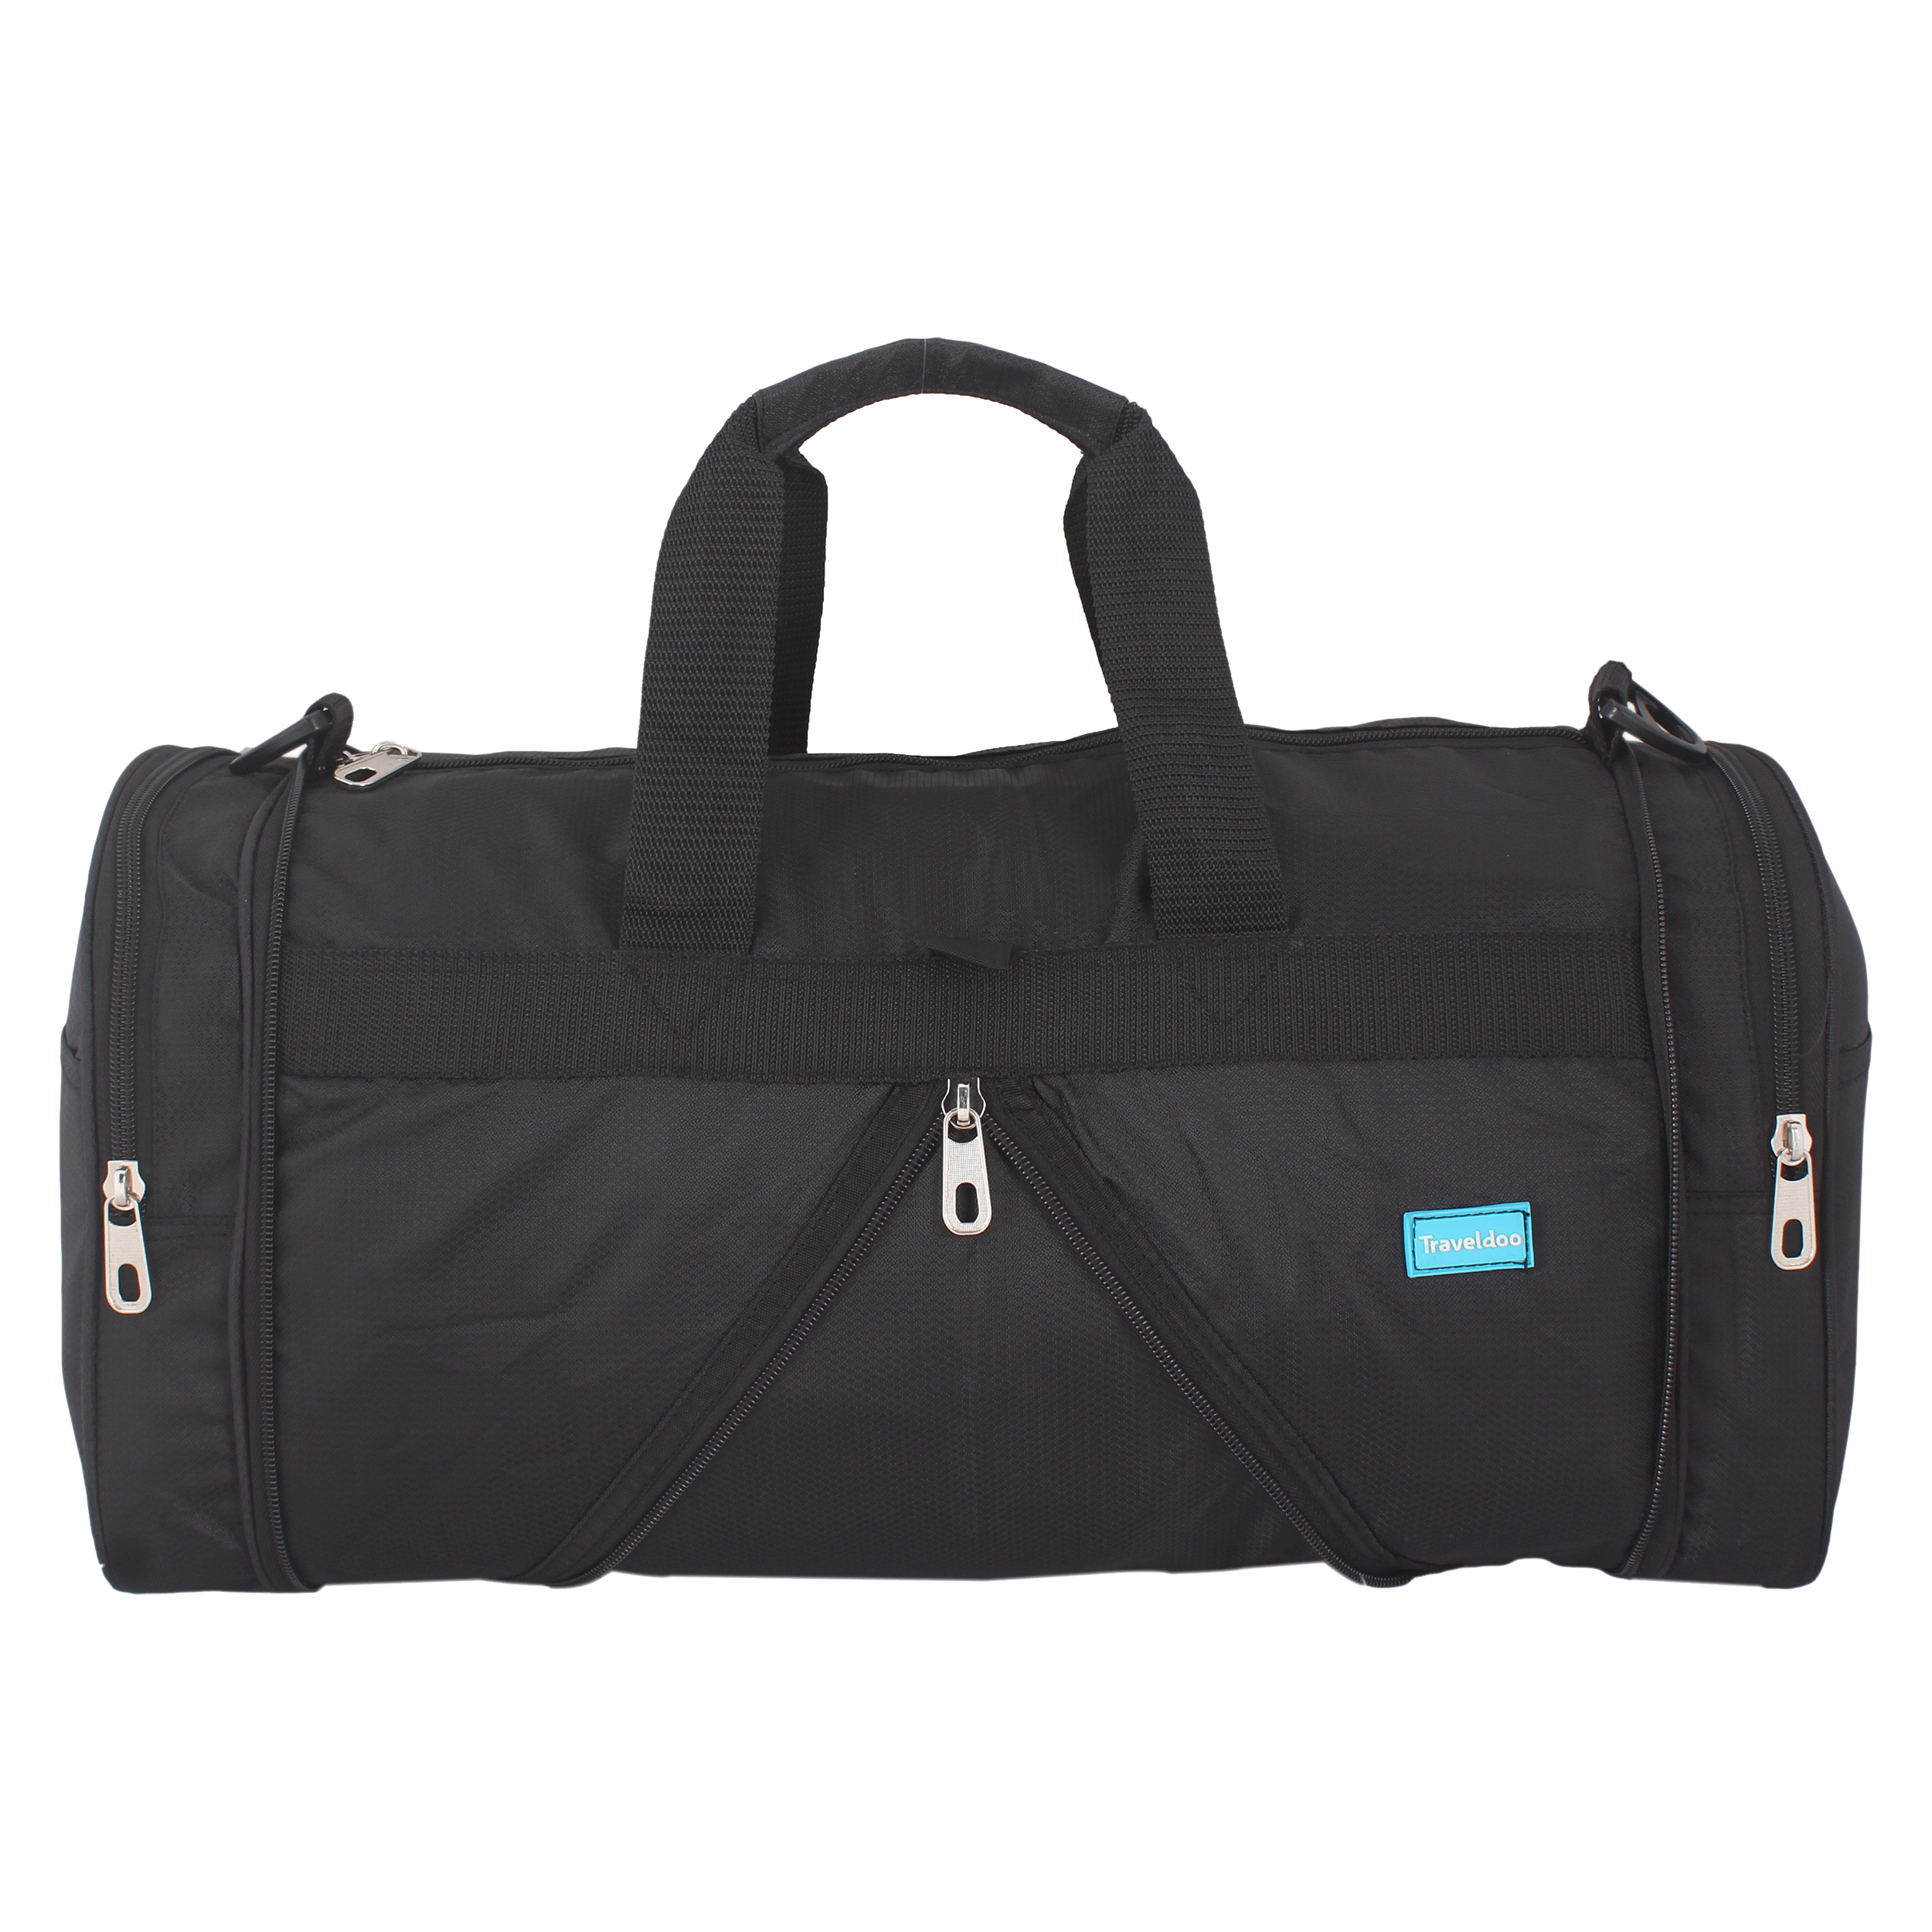 Traveldoo 22 inch Square Folding Duffle Bag (DBS02001, Black)